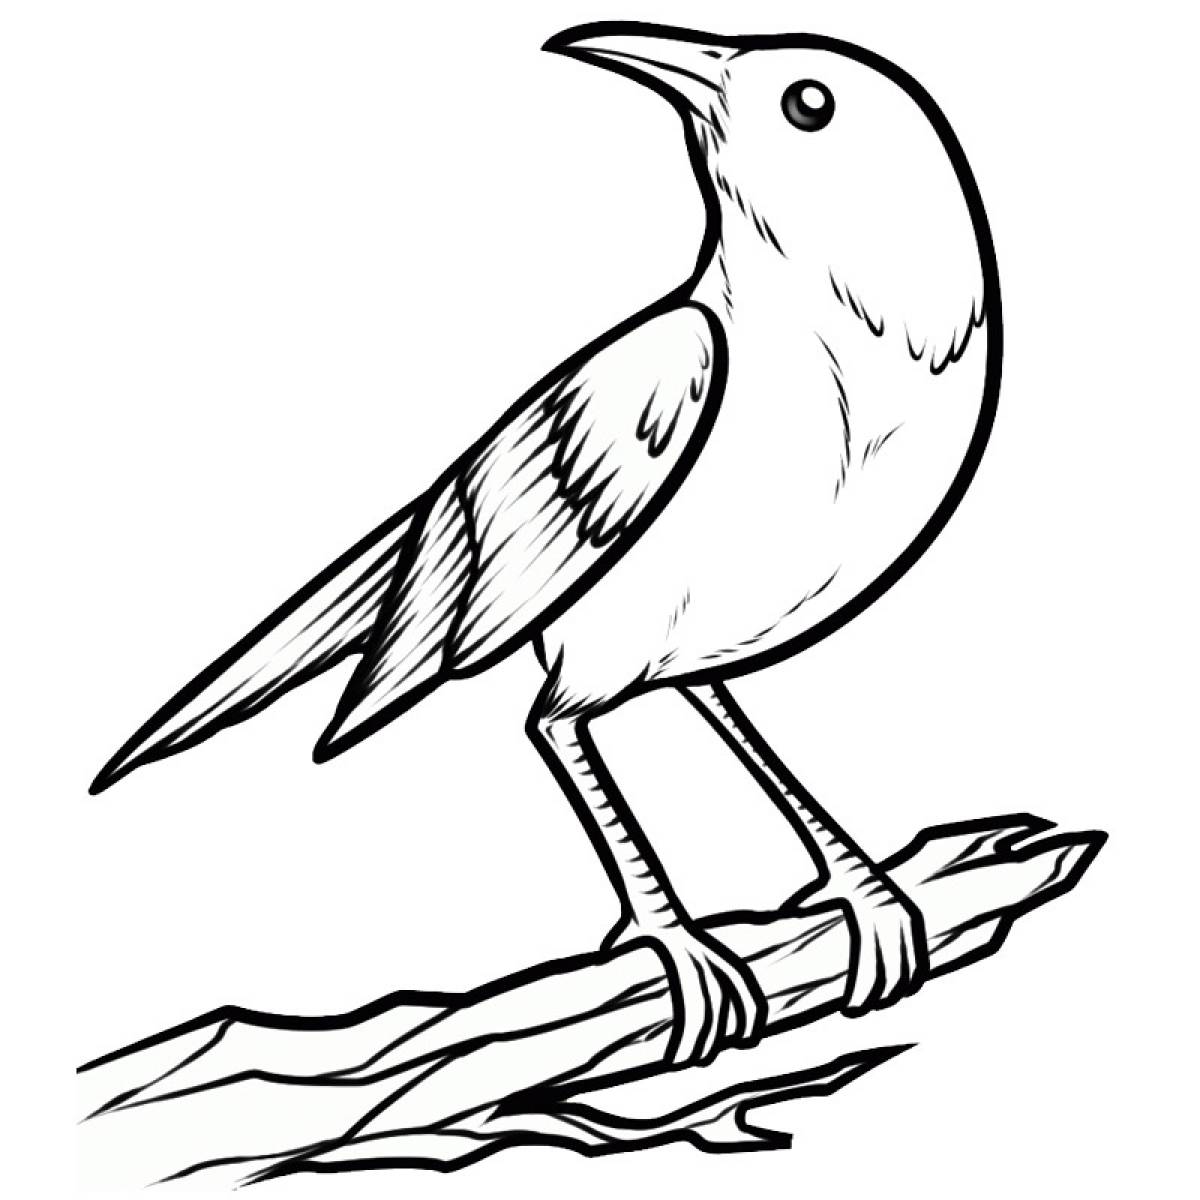 Nightingale drawing